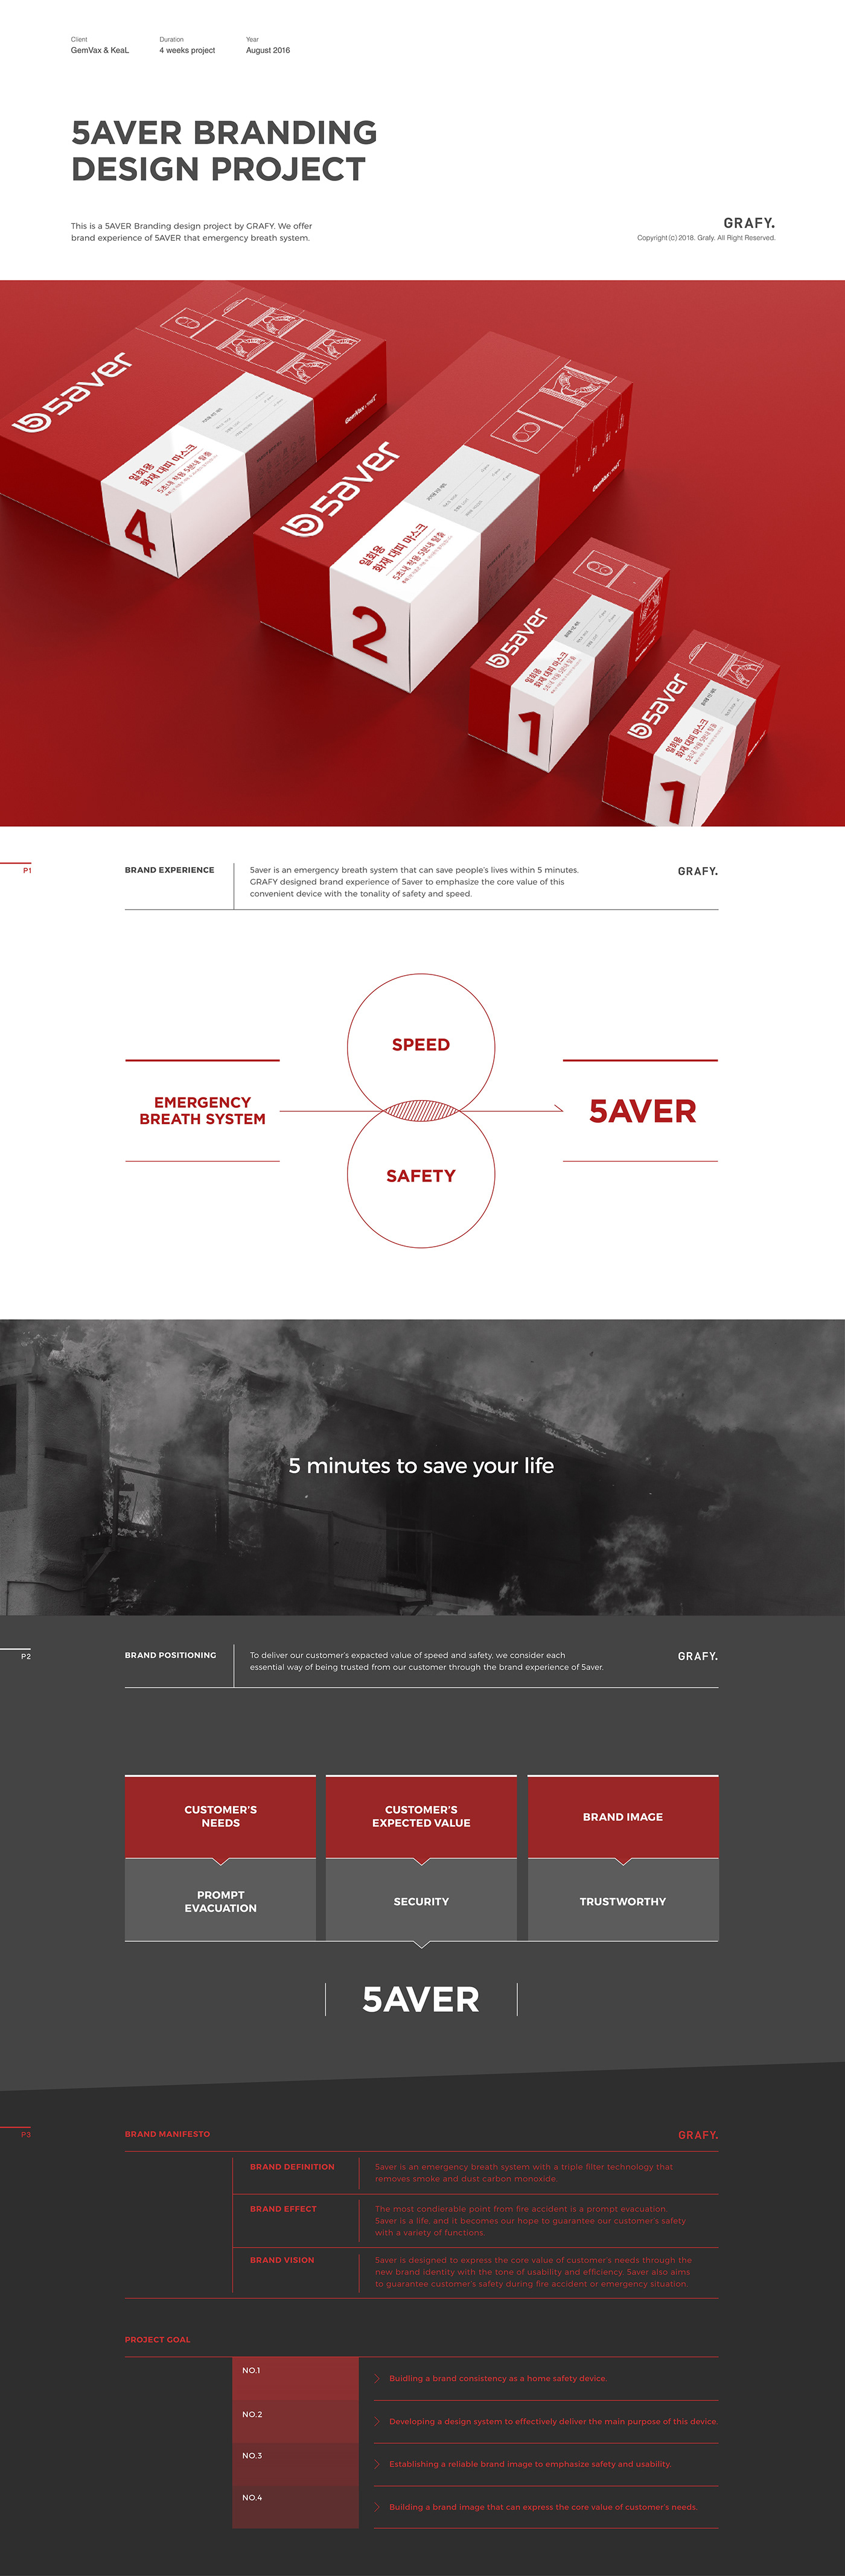 Brochure design idea #381: Kingsmen l BX Lab. / 5AVER PACKAGE & BROCHURE DESIGN / kingsmenbxlab.com _branding / evacuation /...